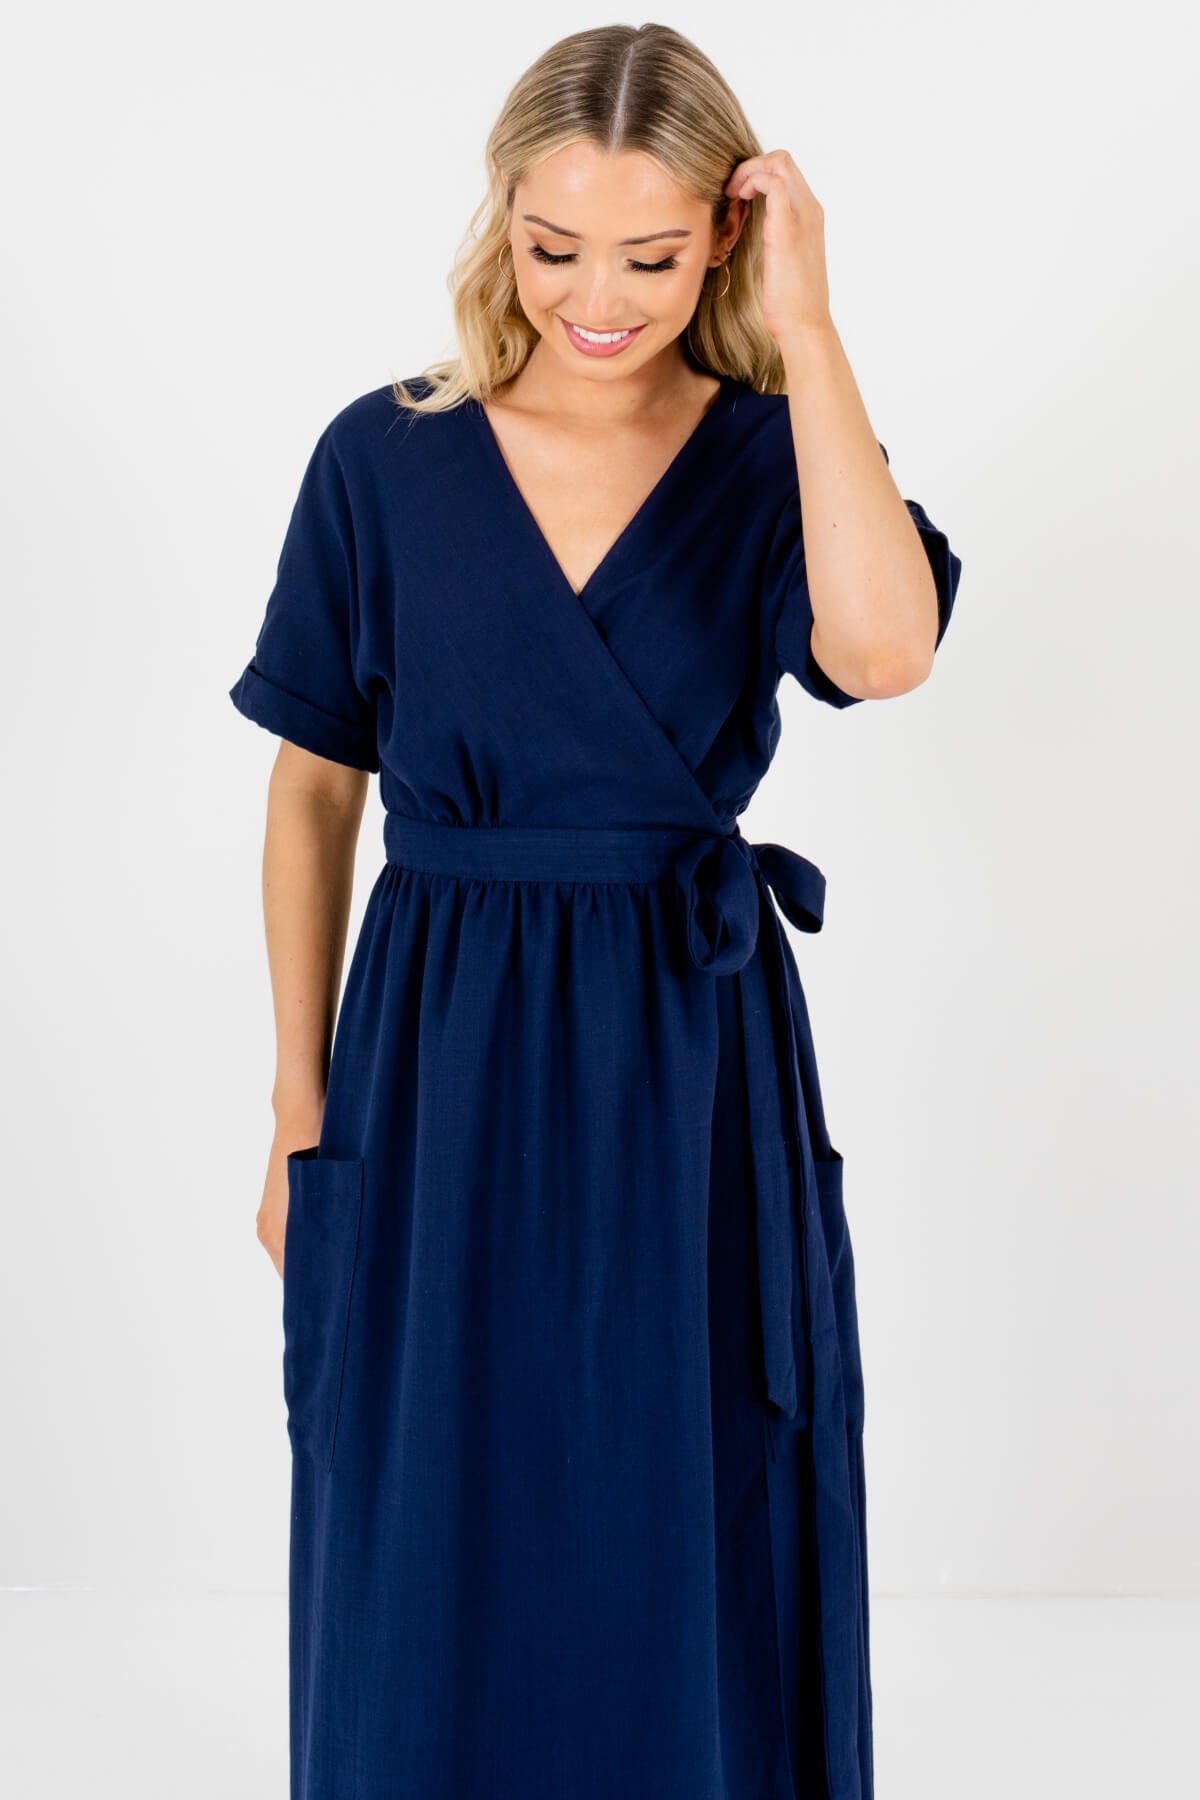 Blue Wrap Dress Maxi Online, 58% OFF ...